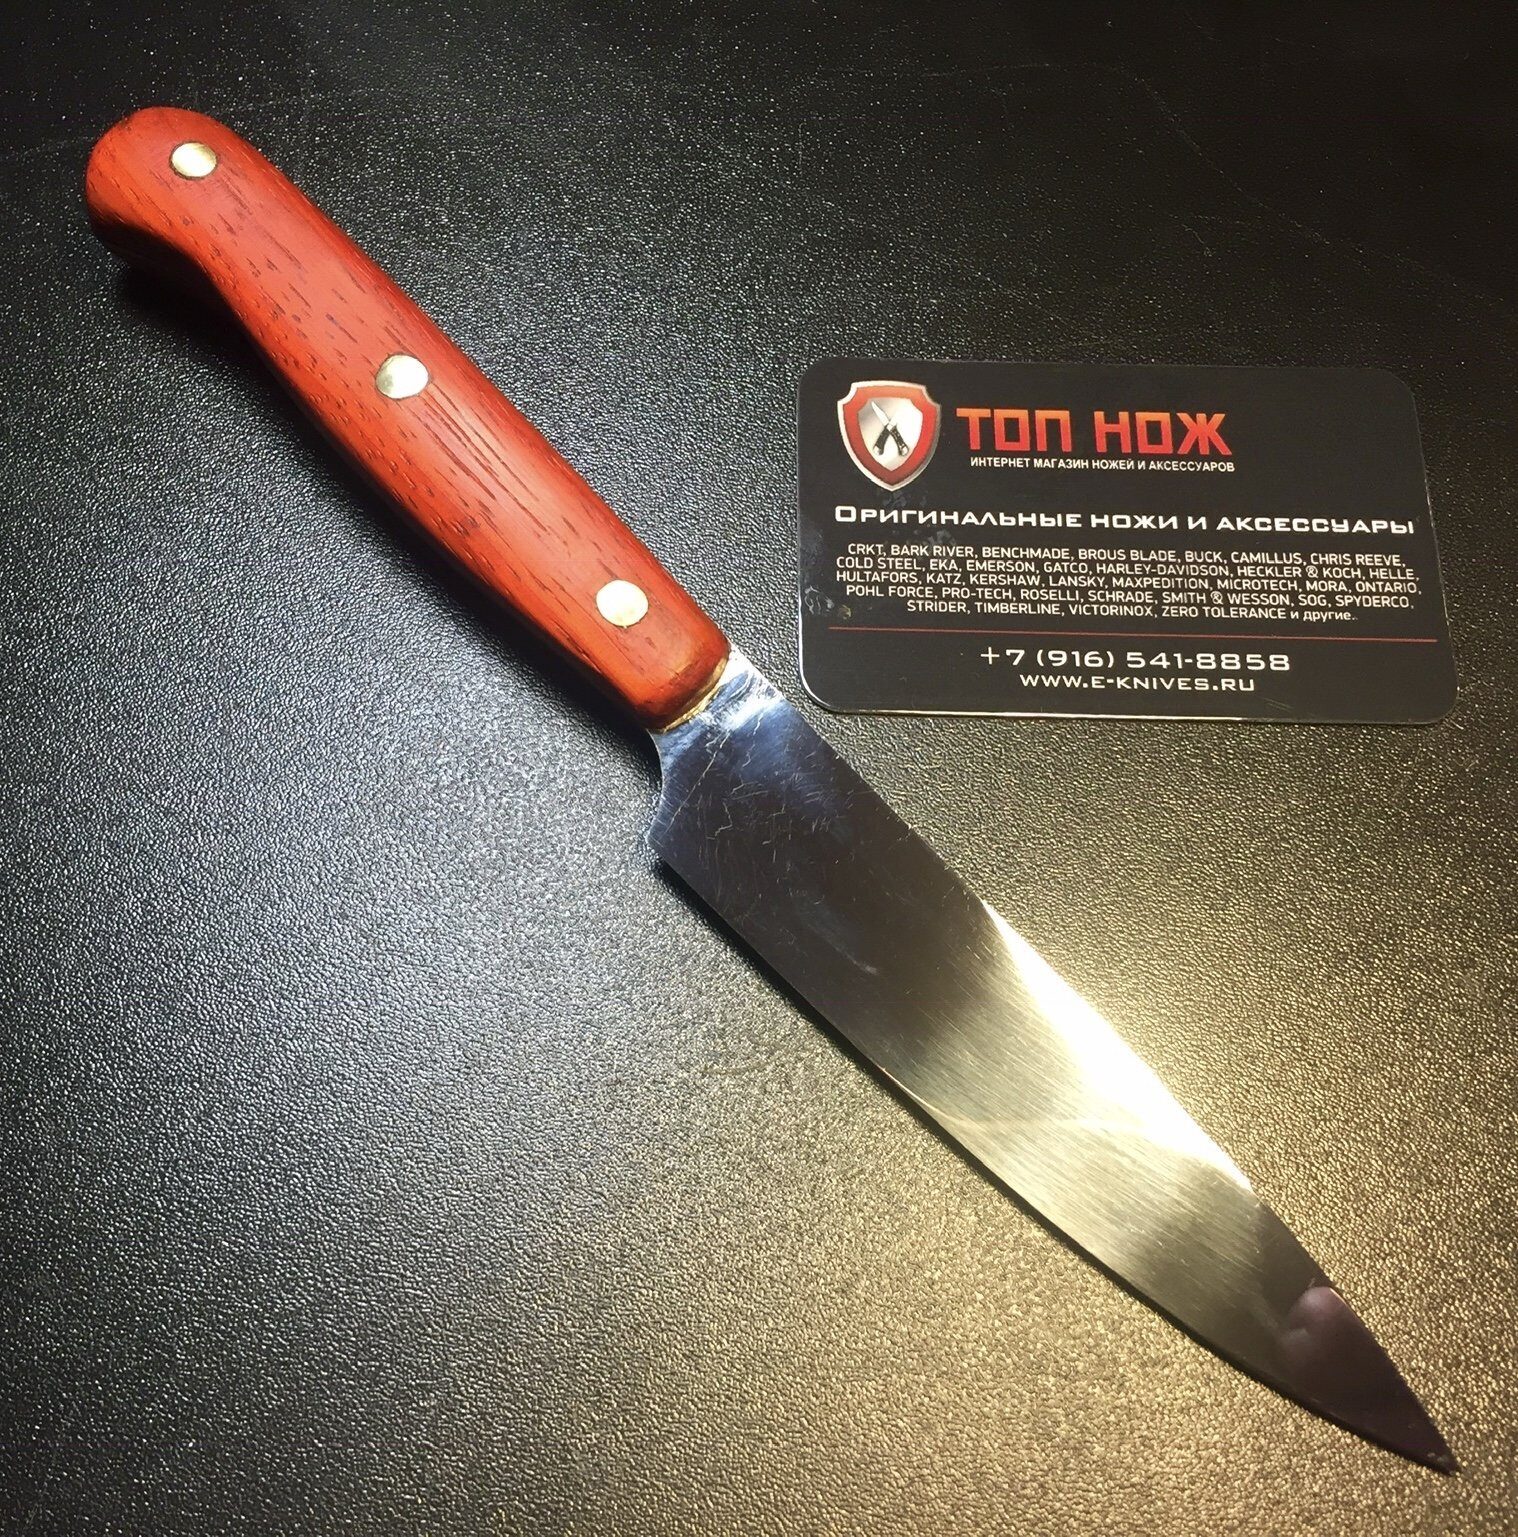 Knife Ru Интернет Магазин Ножей